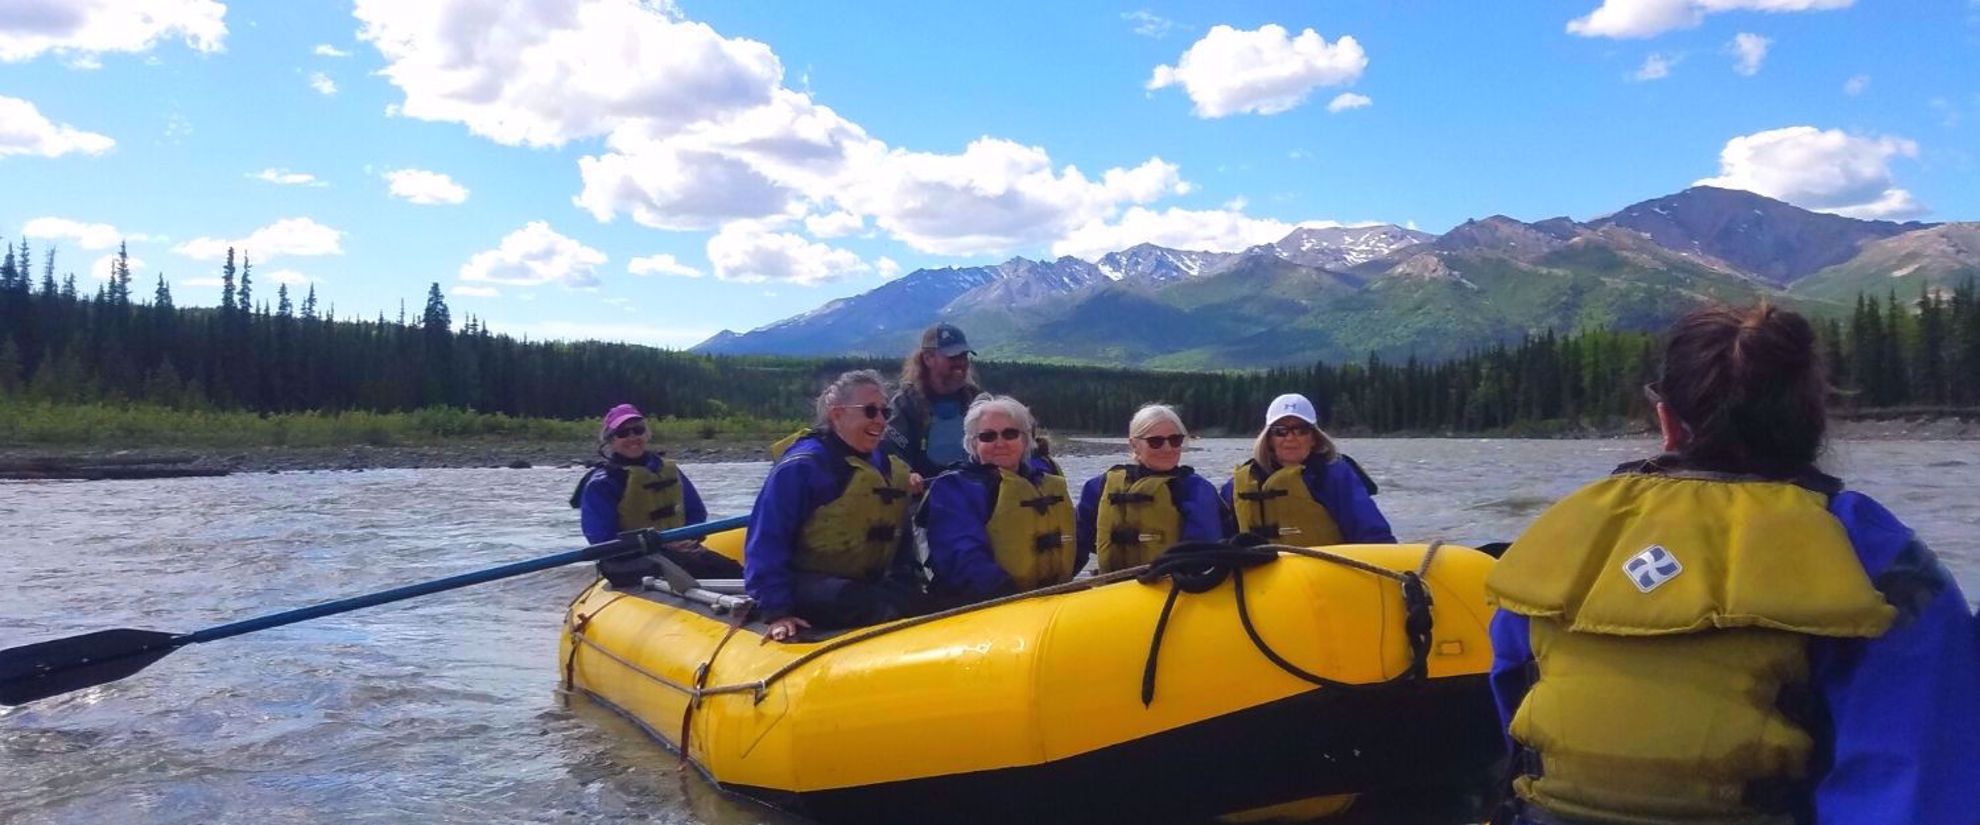 Women rafting on an Alaska River